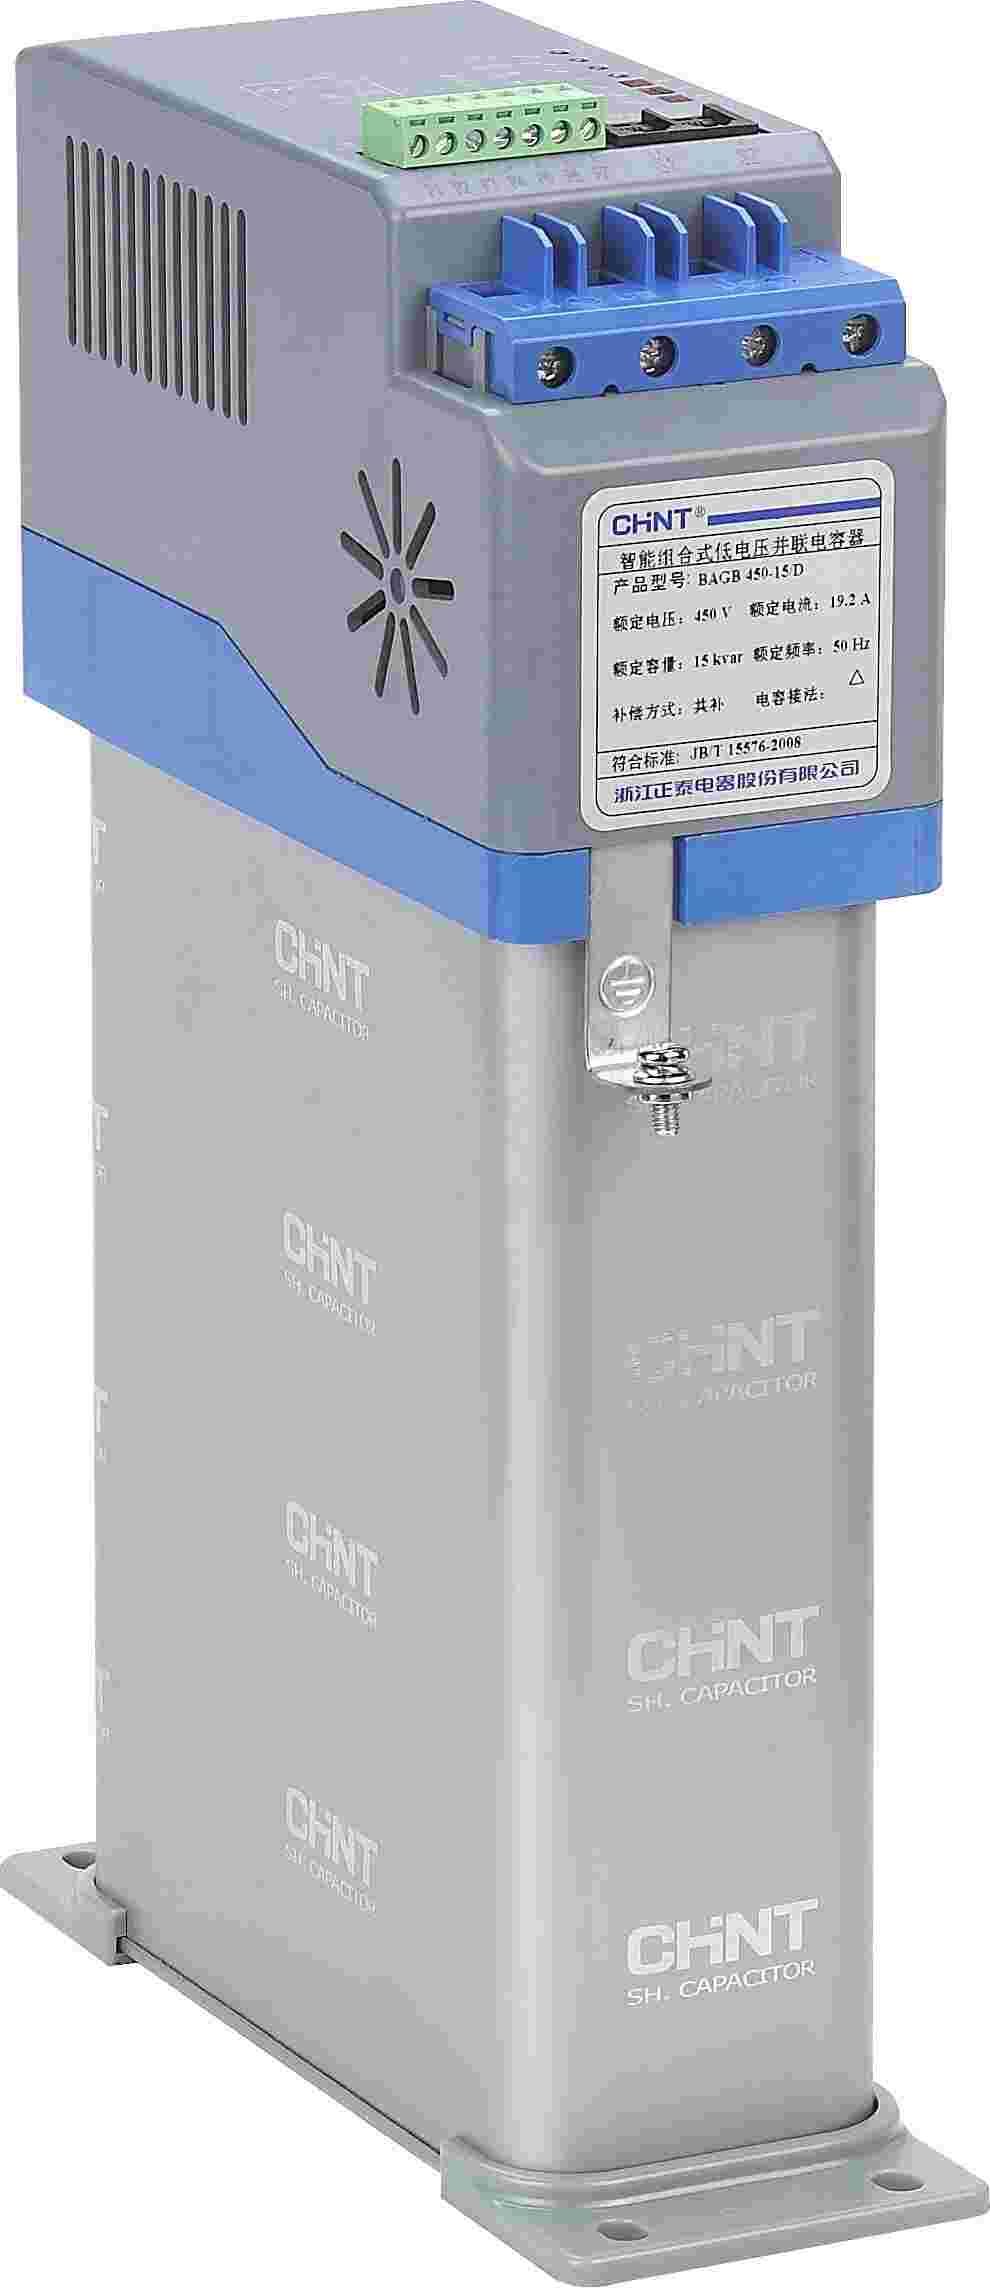 BAFB 450-15 D 智能组合式低电压并联电容器侧俯图.png